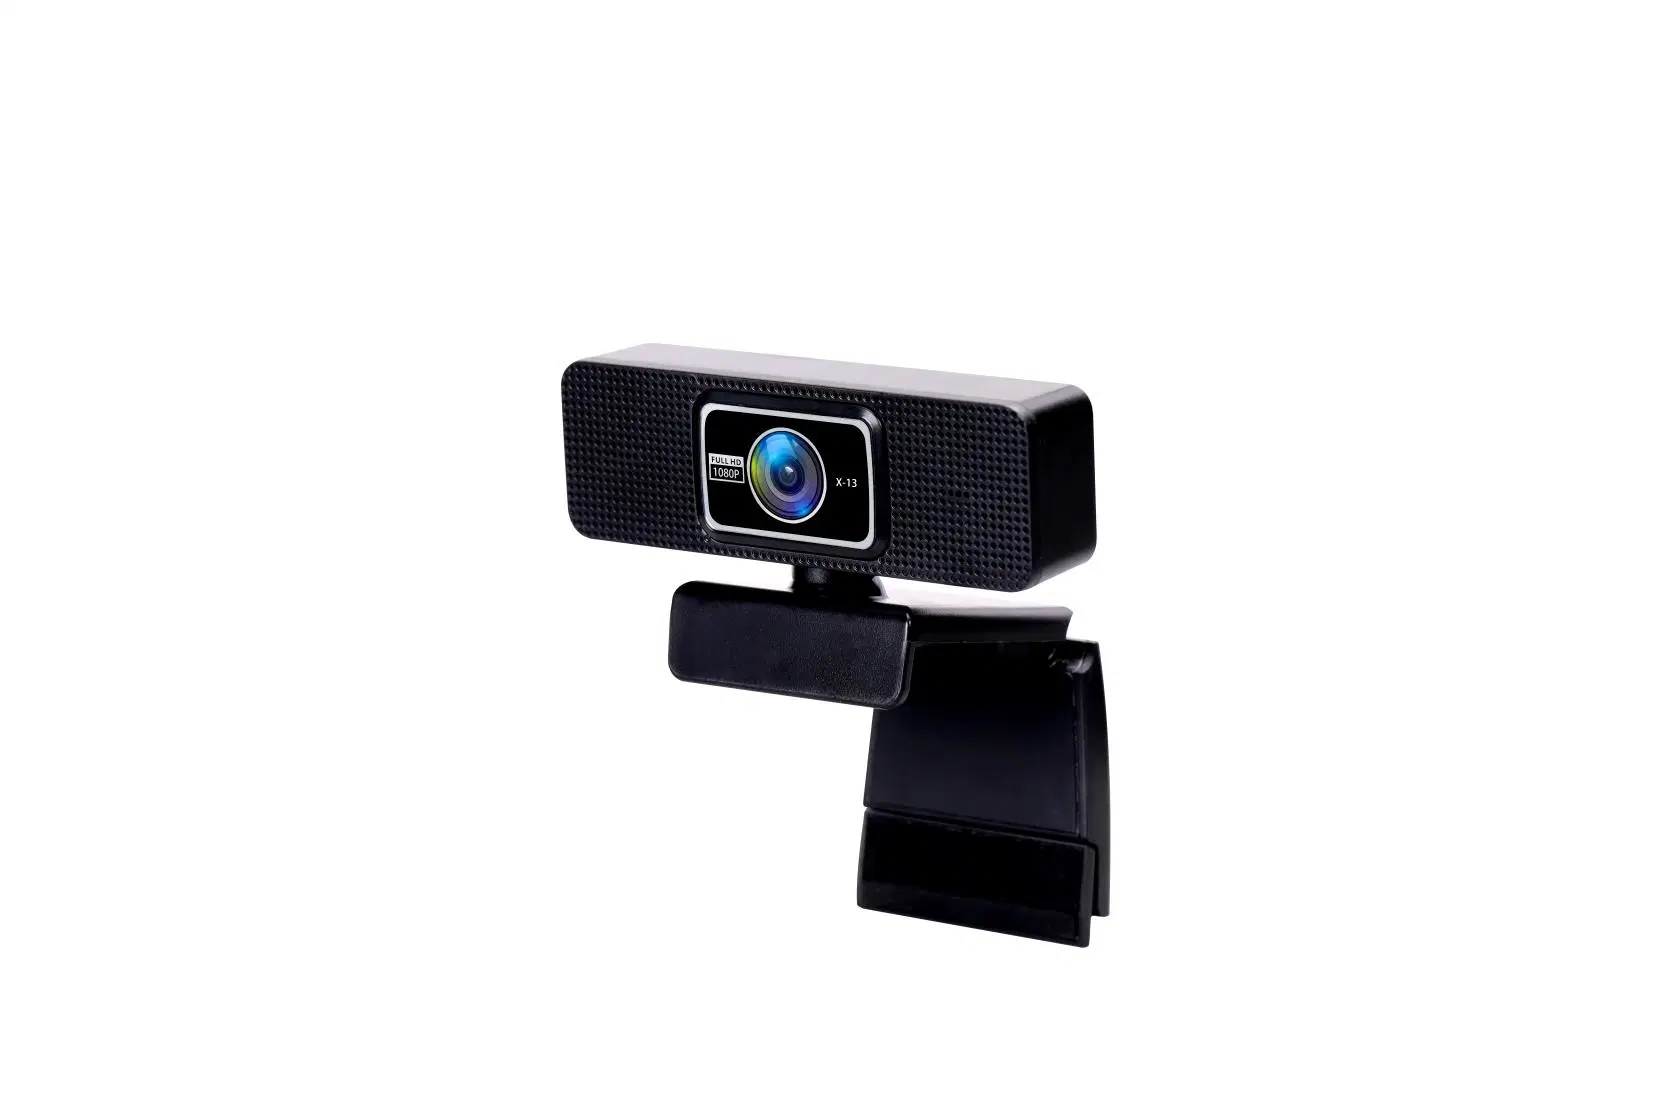 New Arrival HD Web Camera 1080P Video Call Meeting Broadcast Live USB Web Camera for PC Webcam